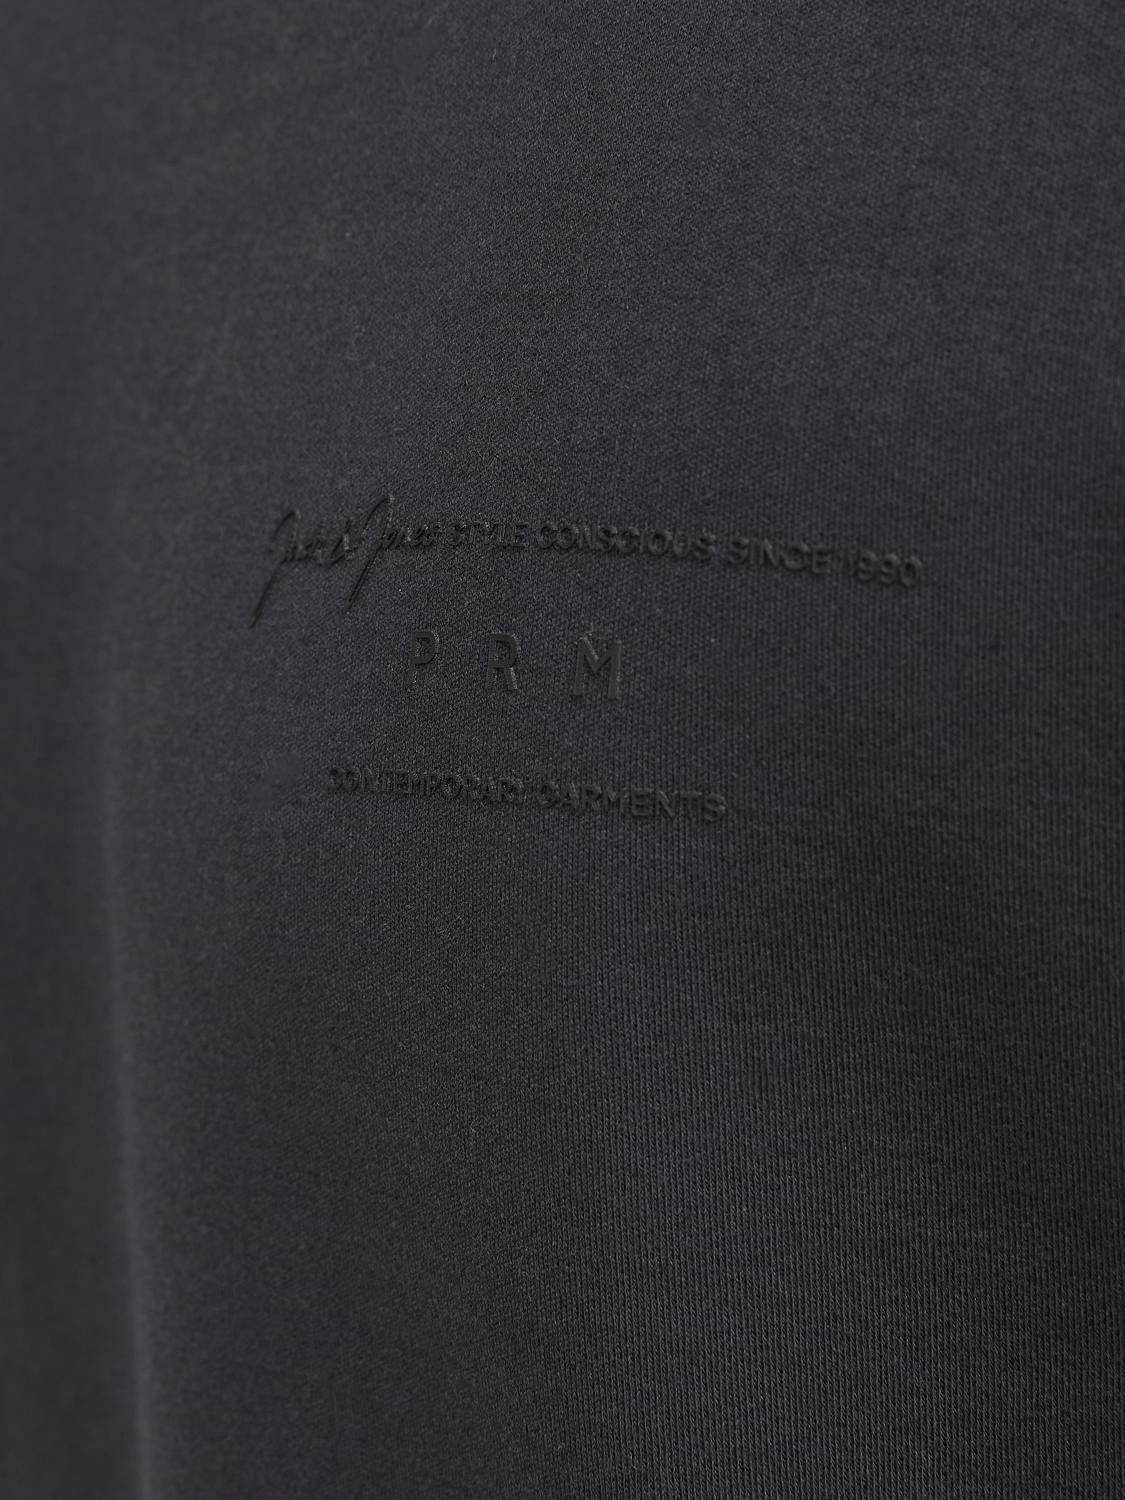 Jack & Jones Gedruckt Rundhals T-shirt -Perfect Navy - 12245400